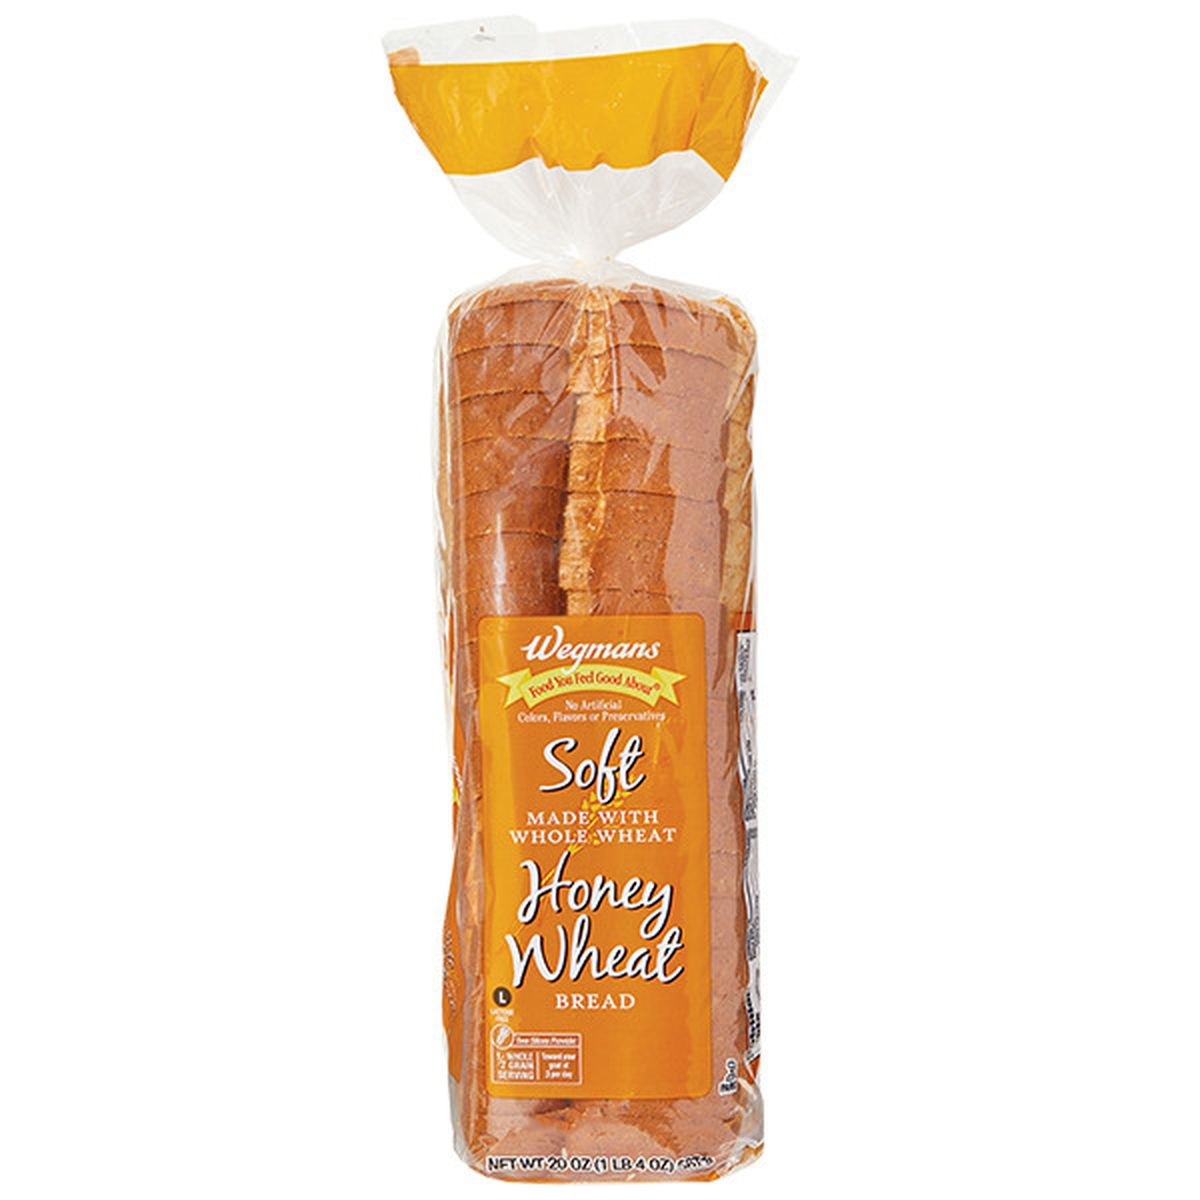 Calories in Wegmans Soft Honey Wheat Bread